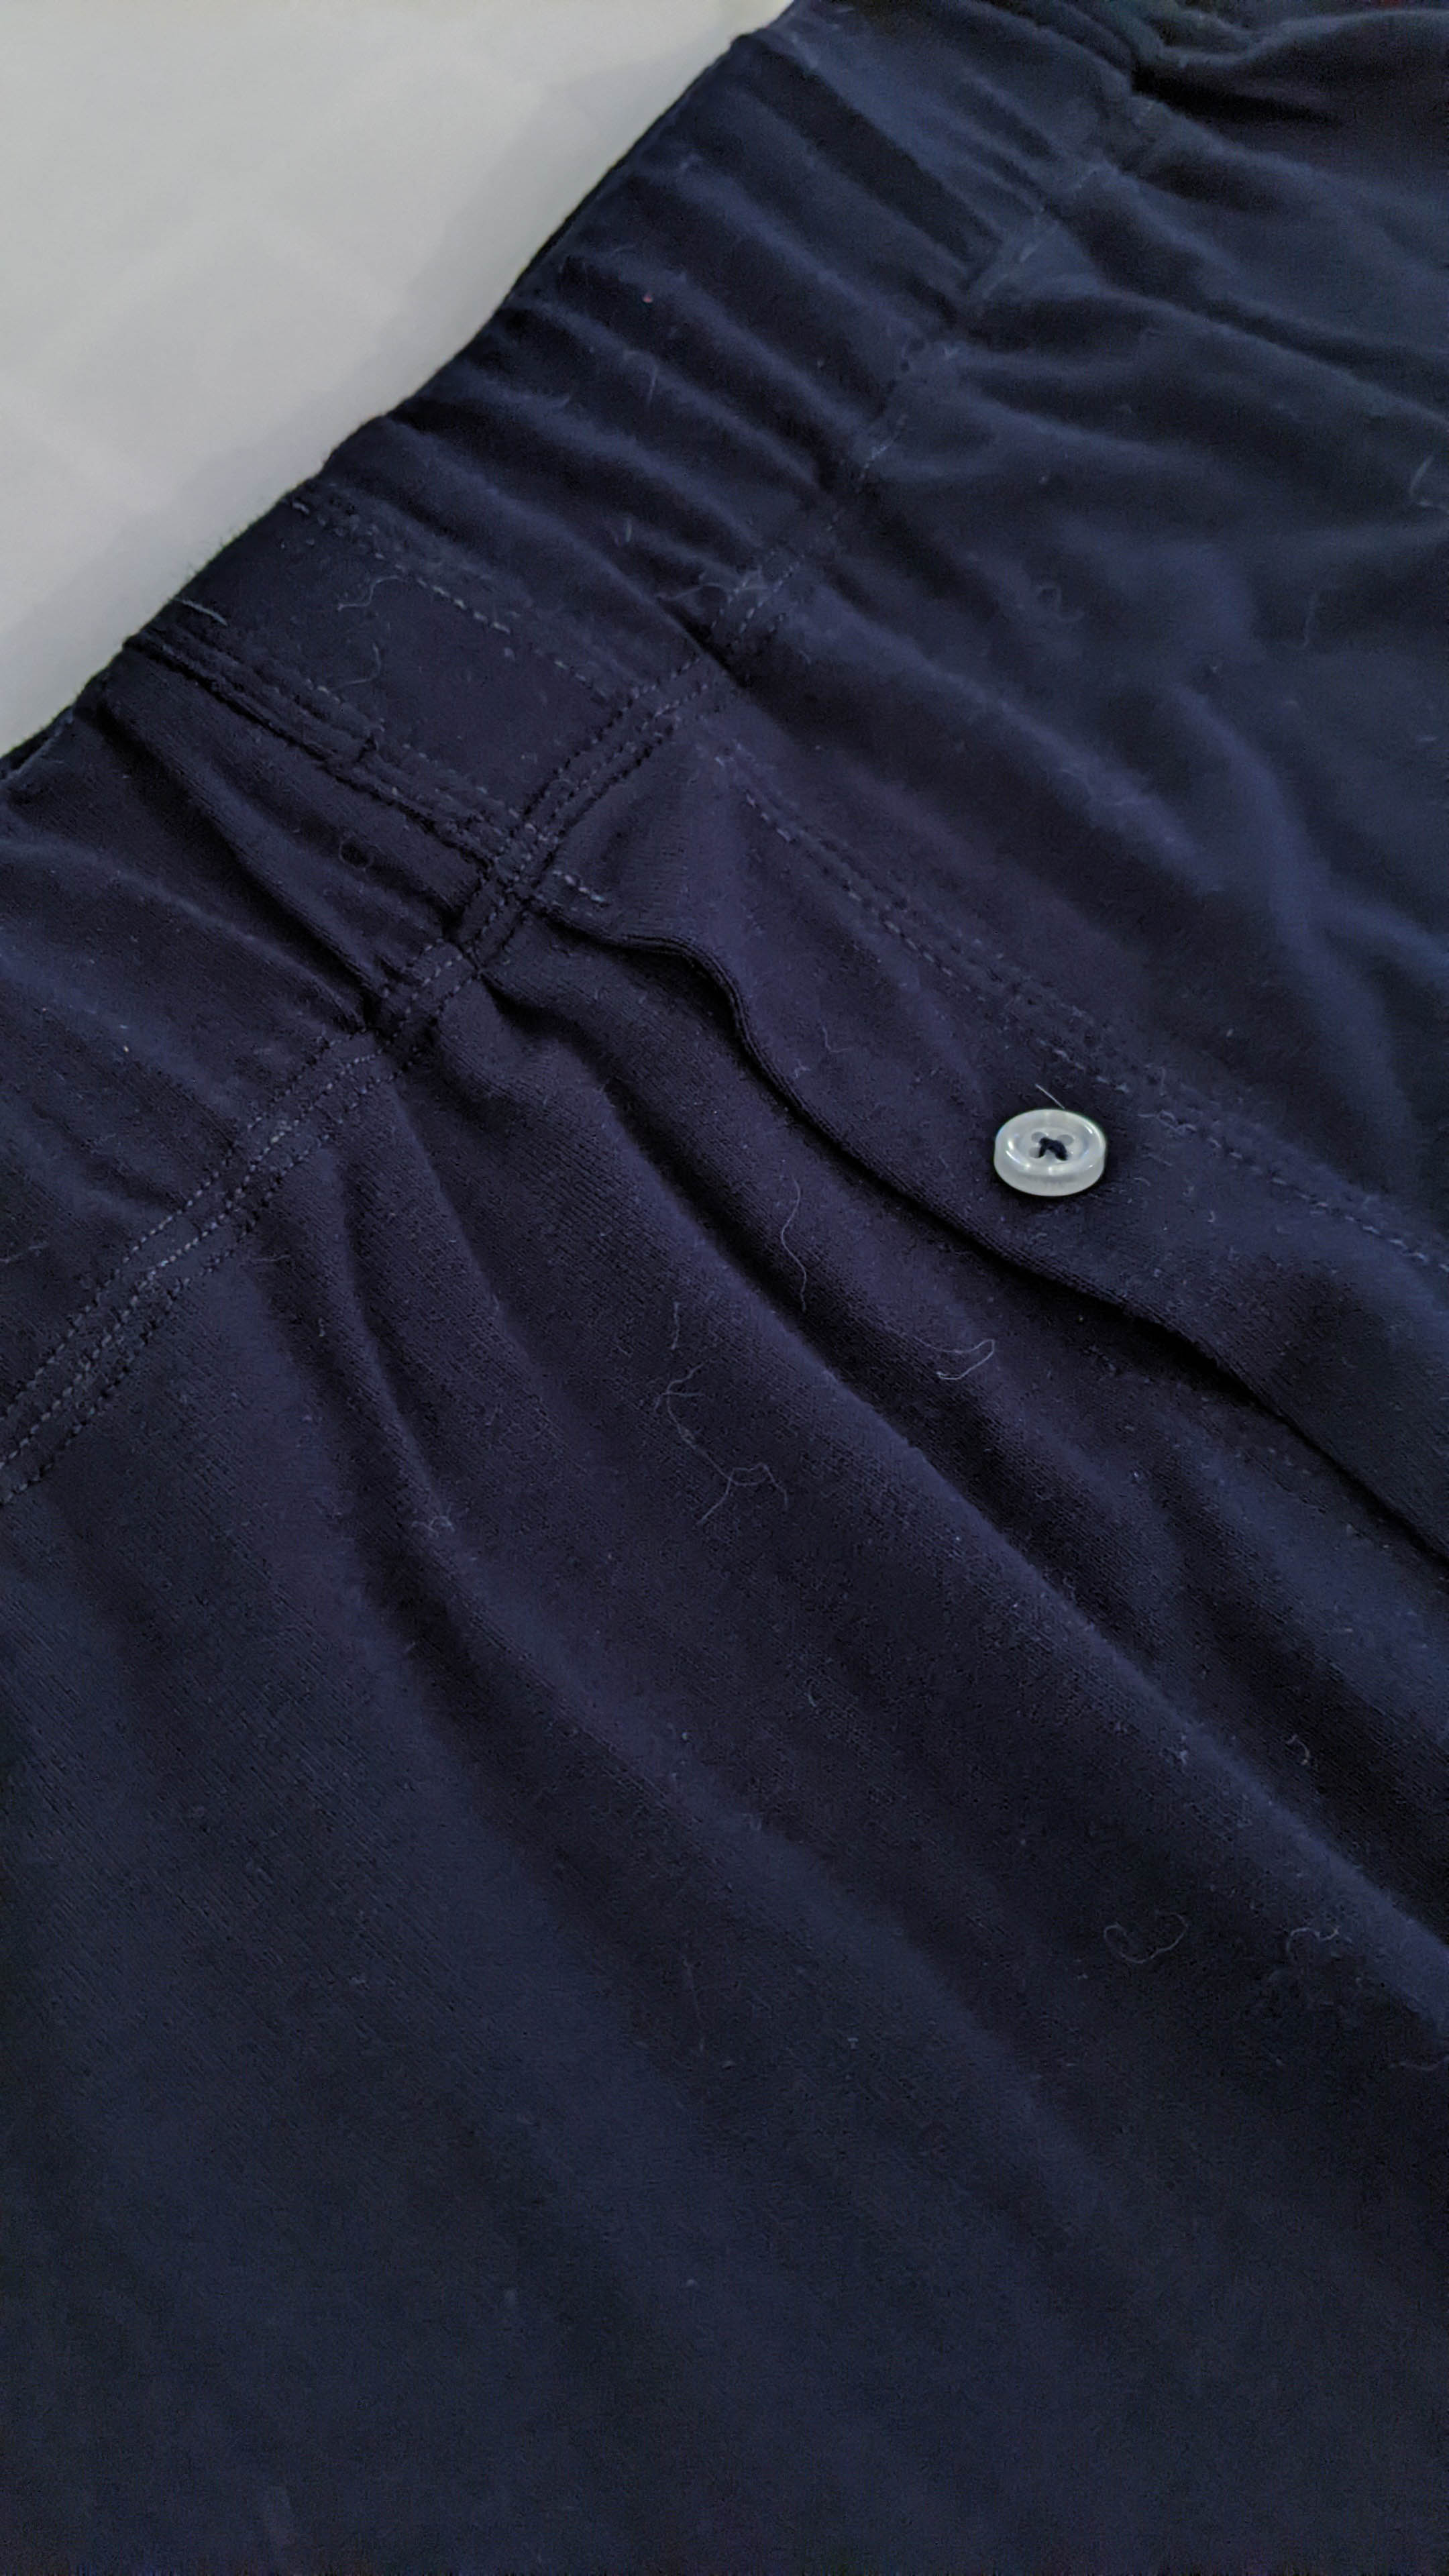 L'ASSIDU - Caleçon jersey bleu marine